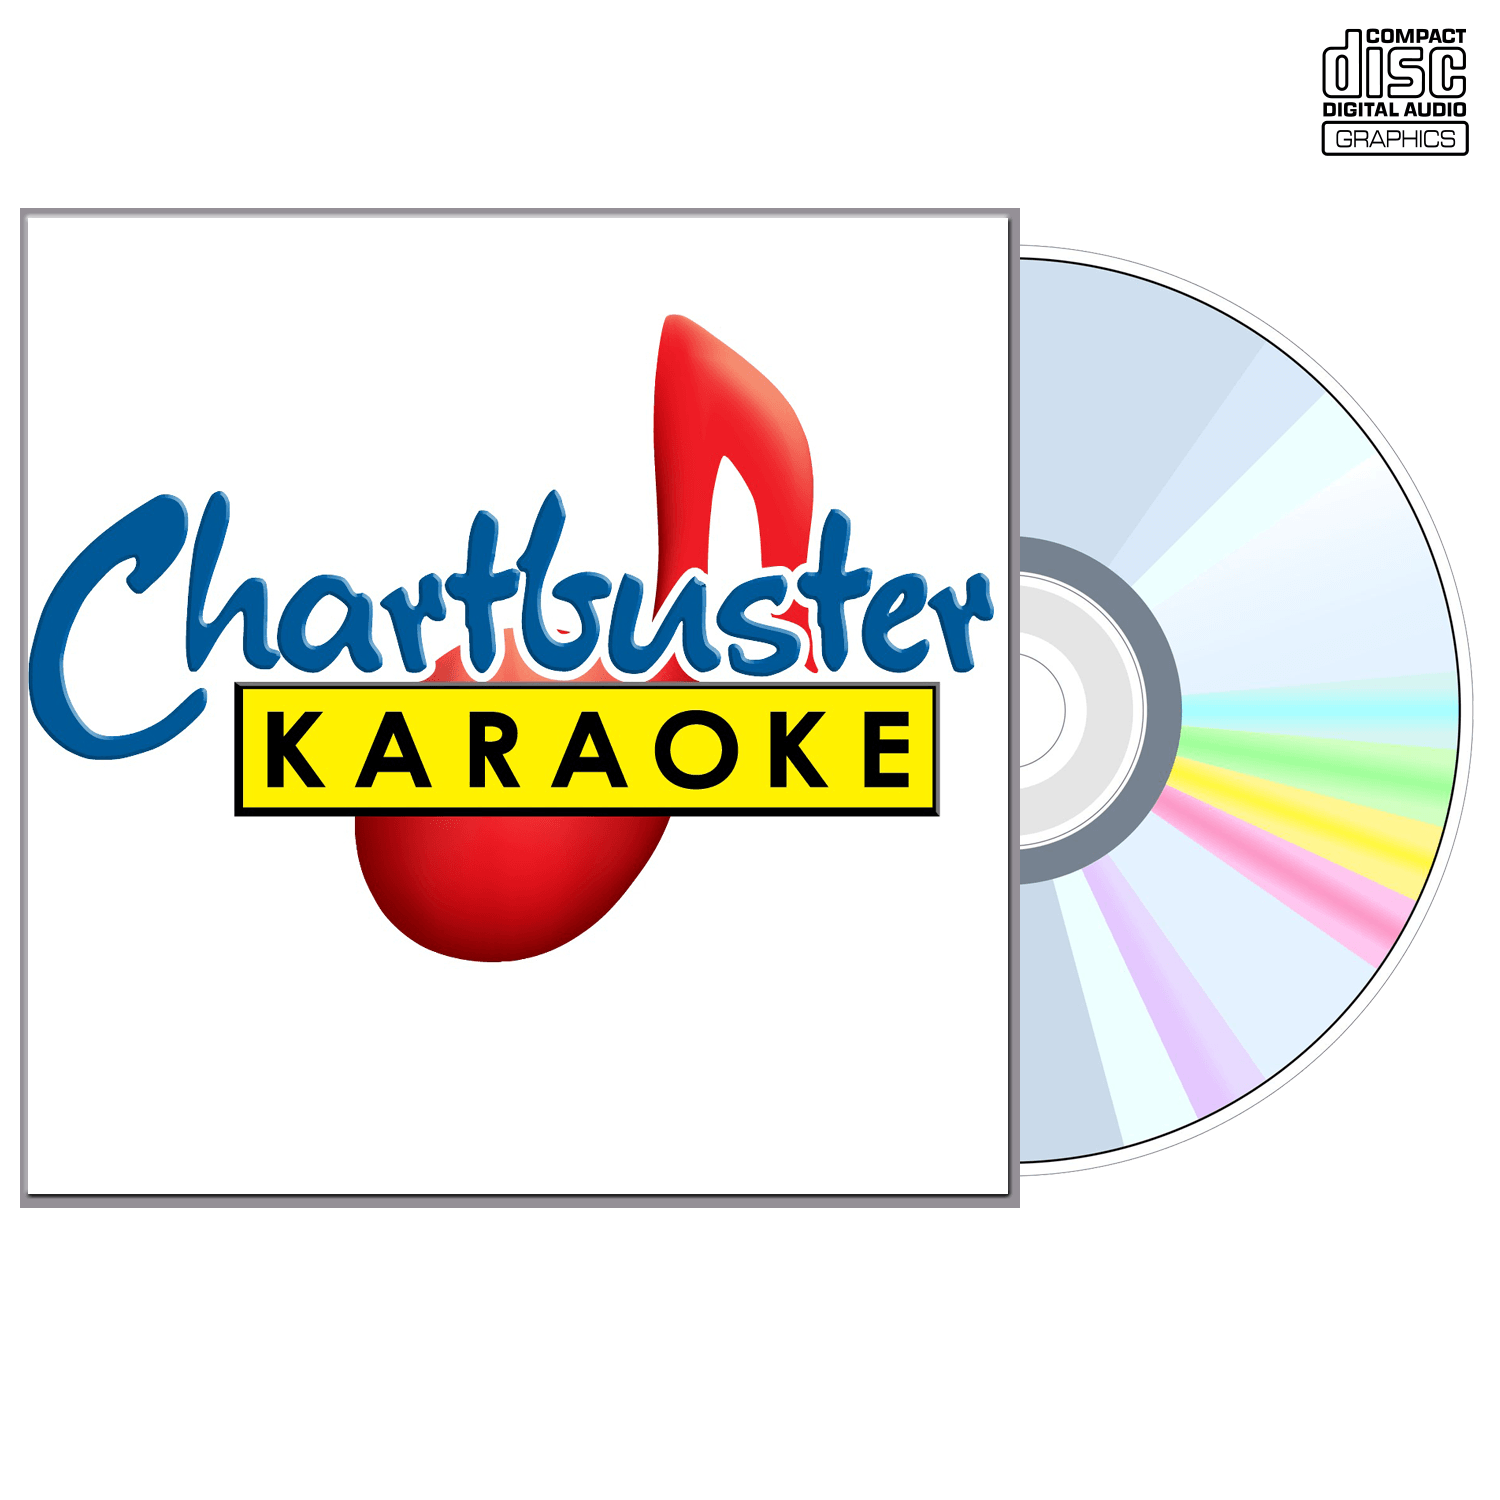 Ladies 2010-2011 Vol 2 - CD+G - Chartbuster Karaoke - Karaoke Home Entertainment